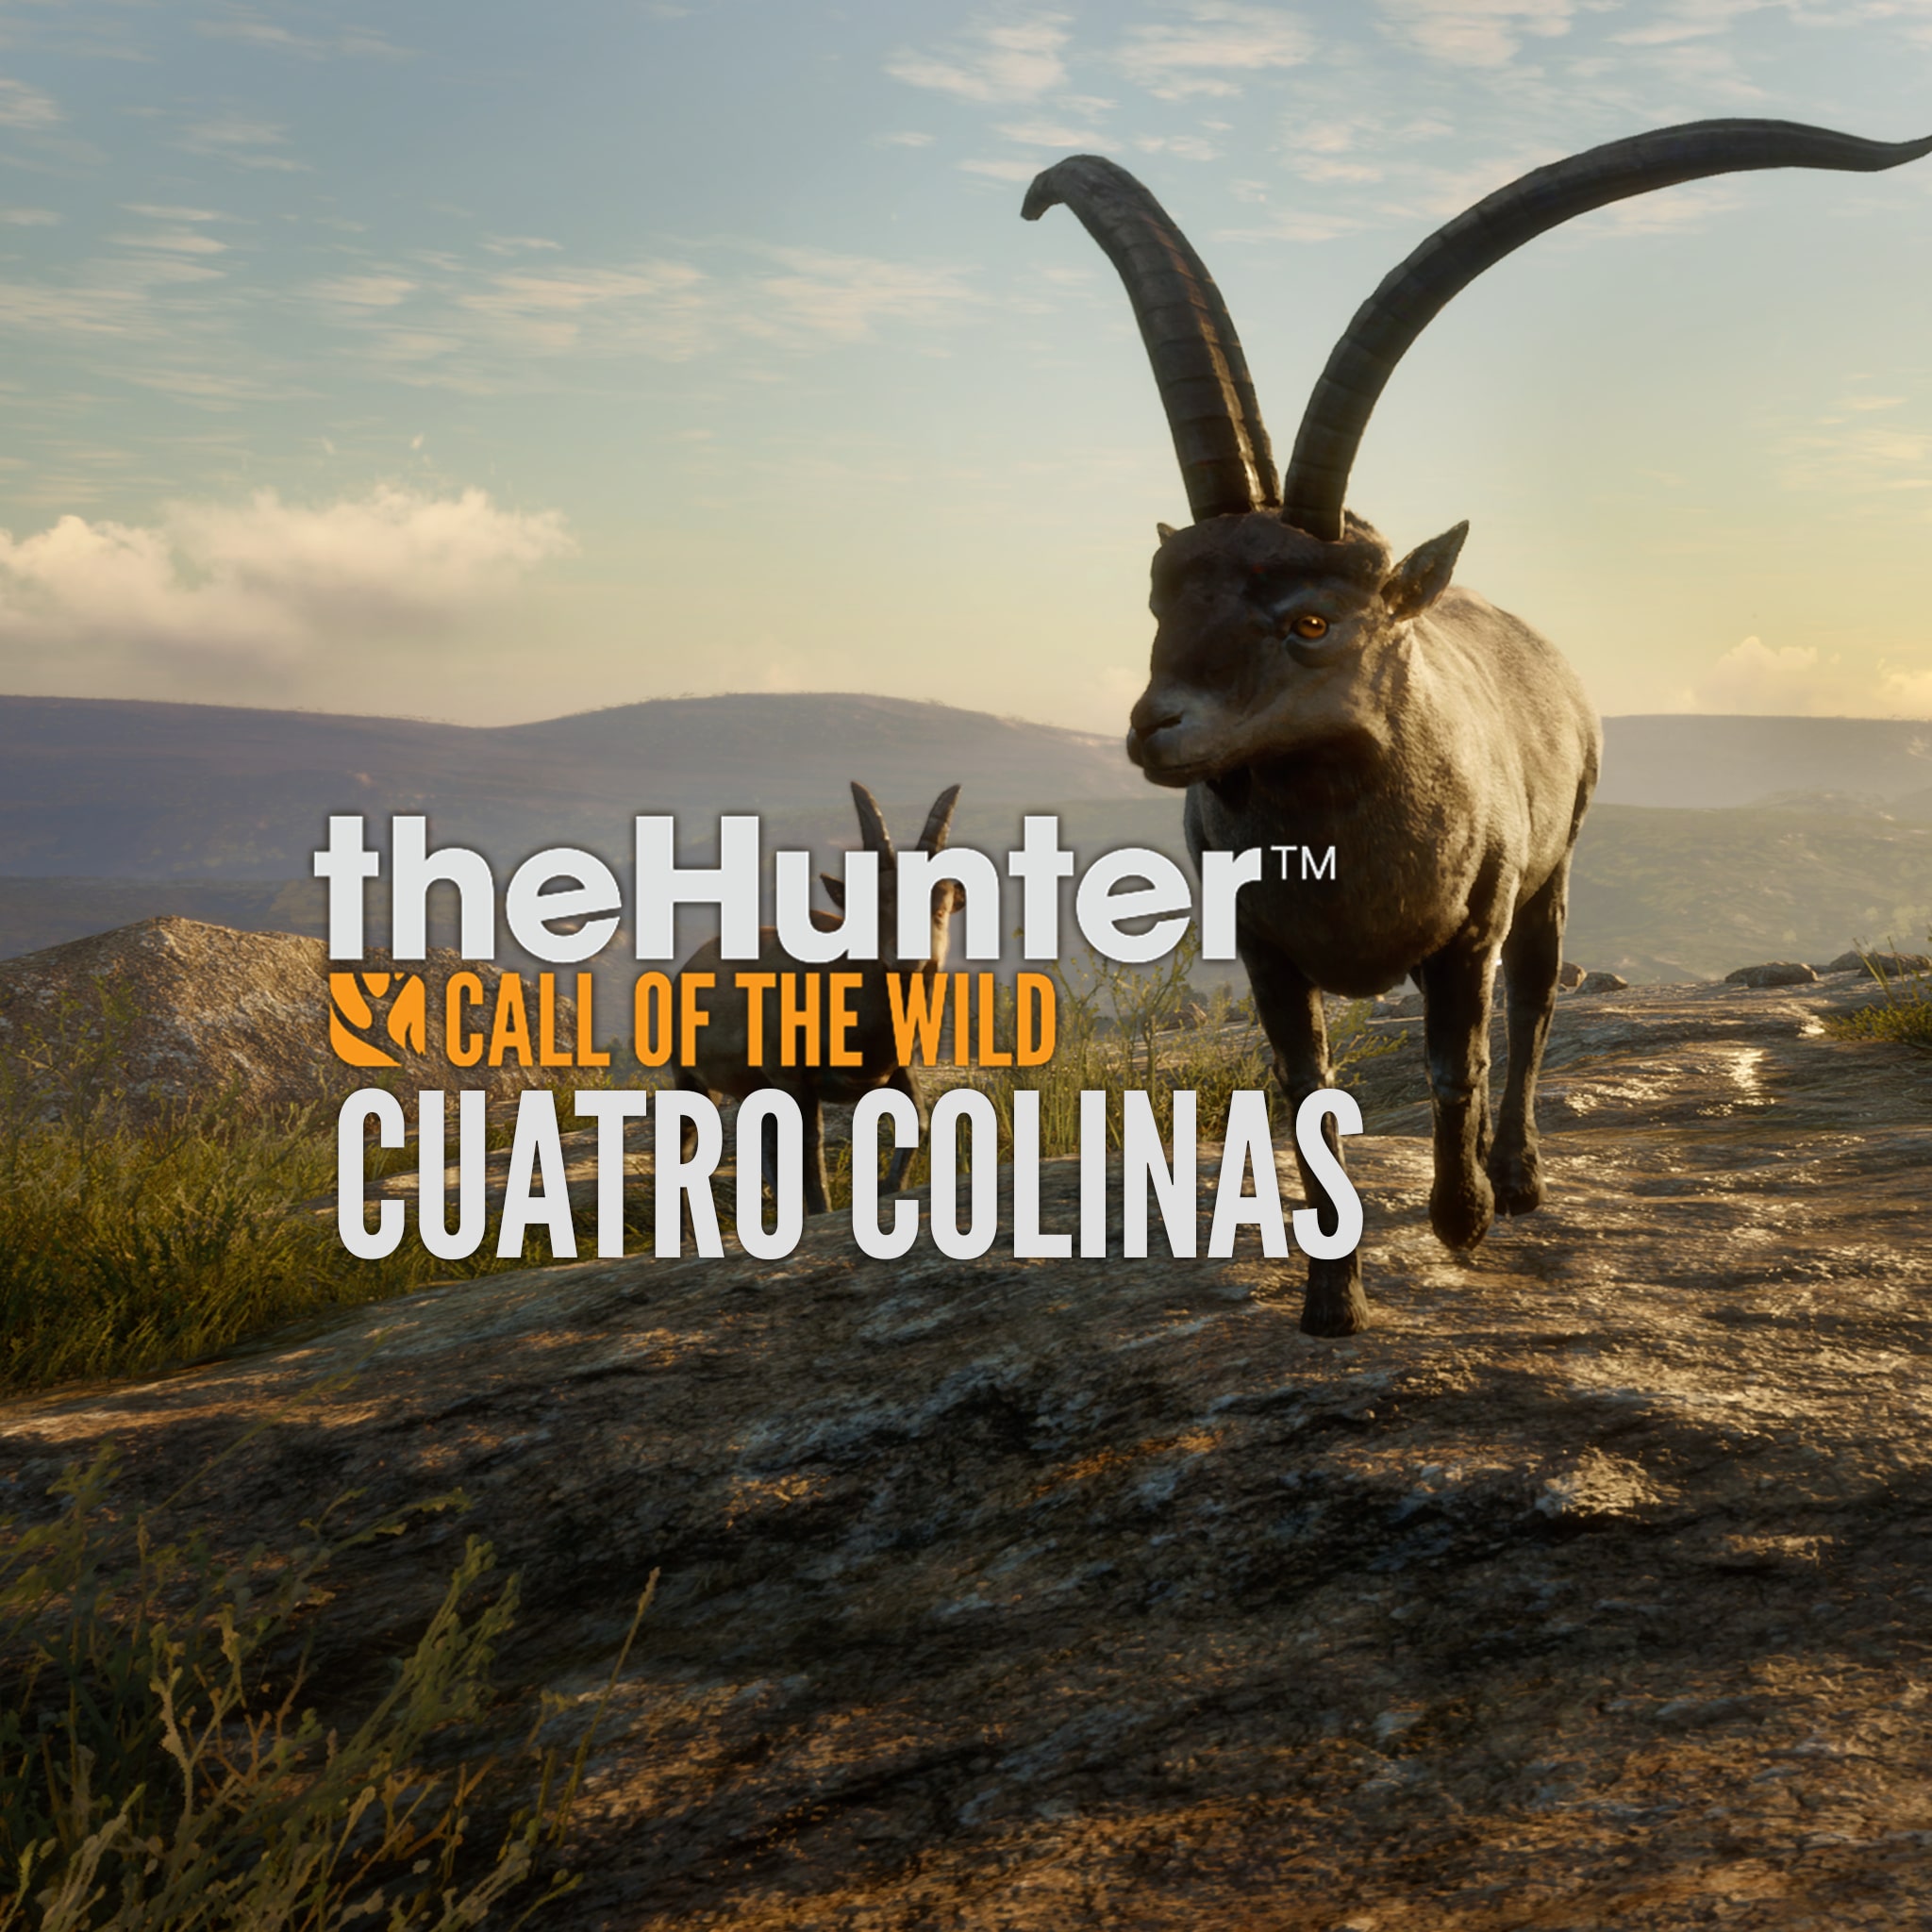 theHunter: Call of the Wild™ - Master Hunter Bundle | Baixe e compre hoje -  Epic Games Store